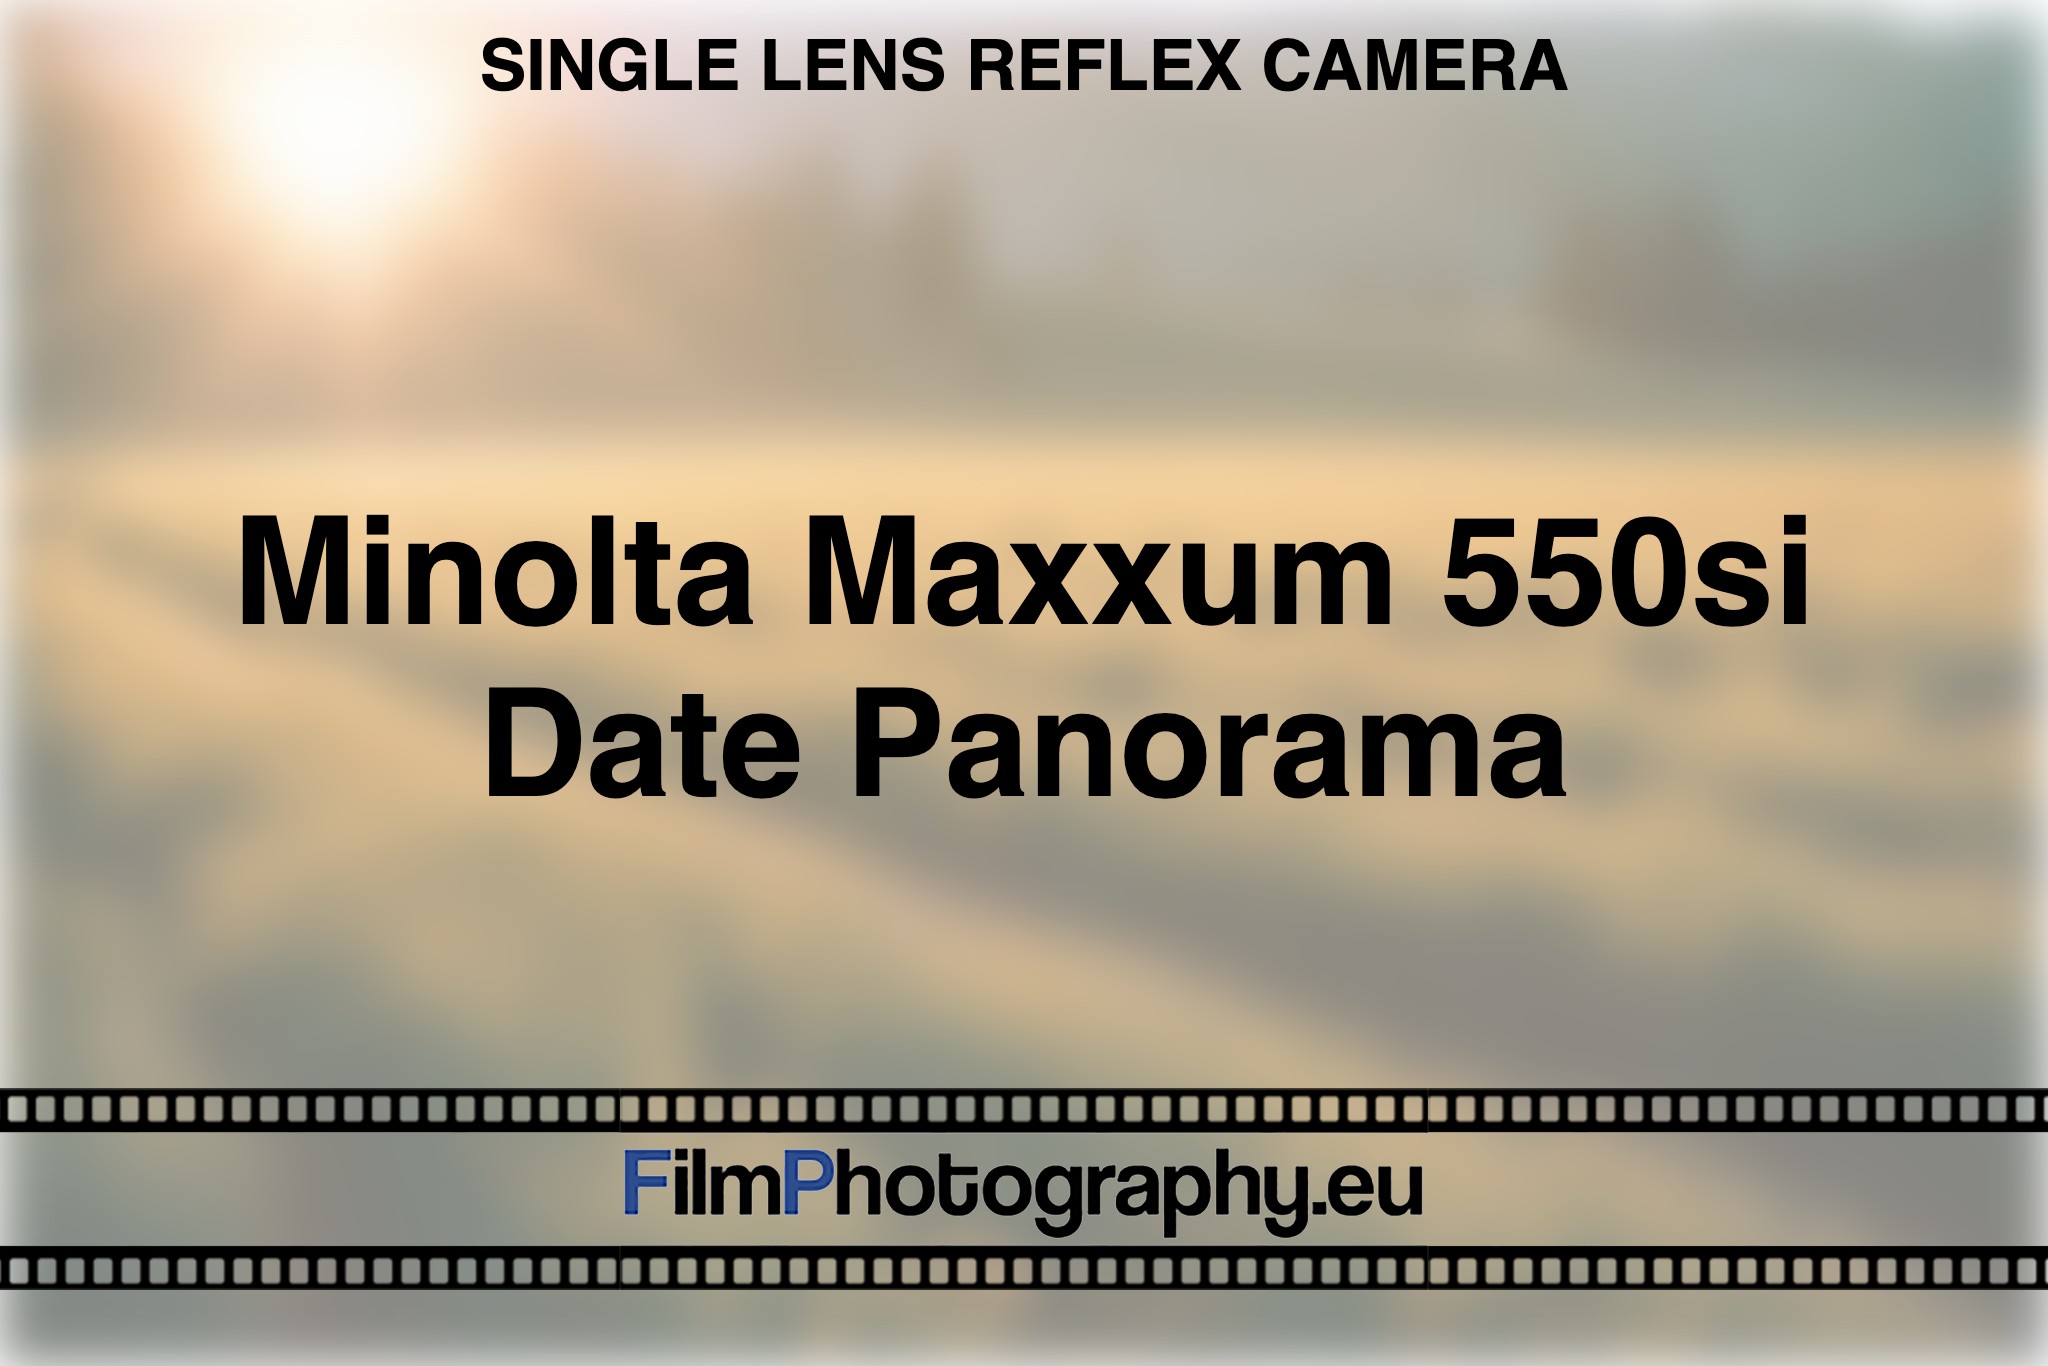 minolta-maxxum-550si-date-panorama-single-lens-reflex-camera-bnv